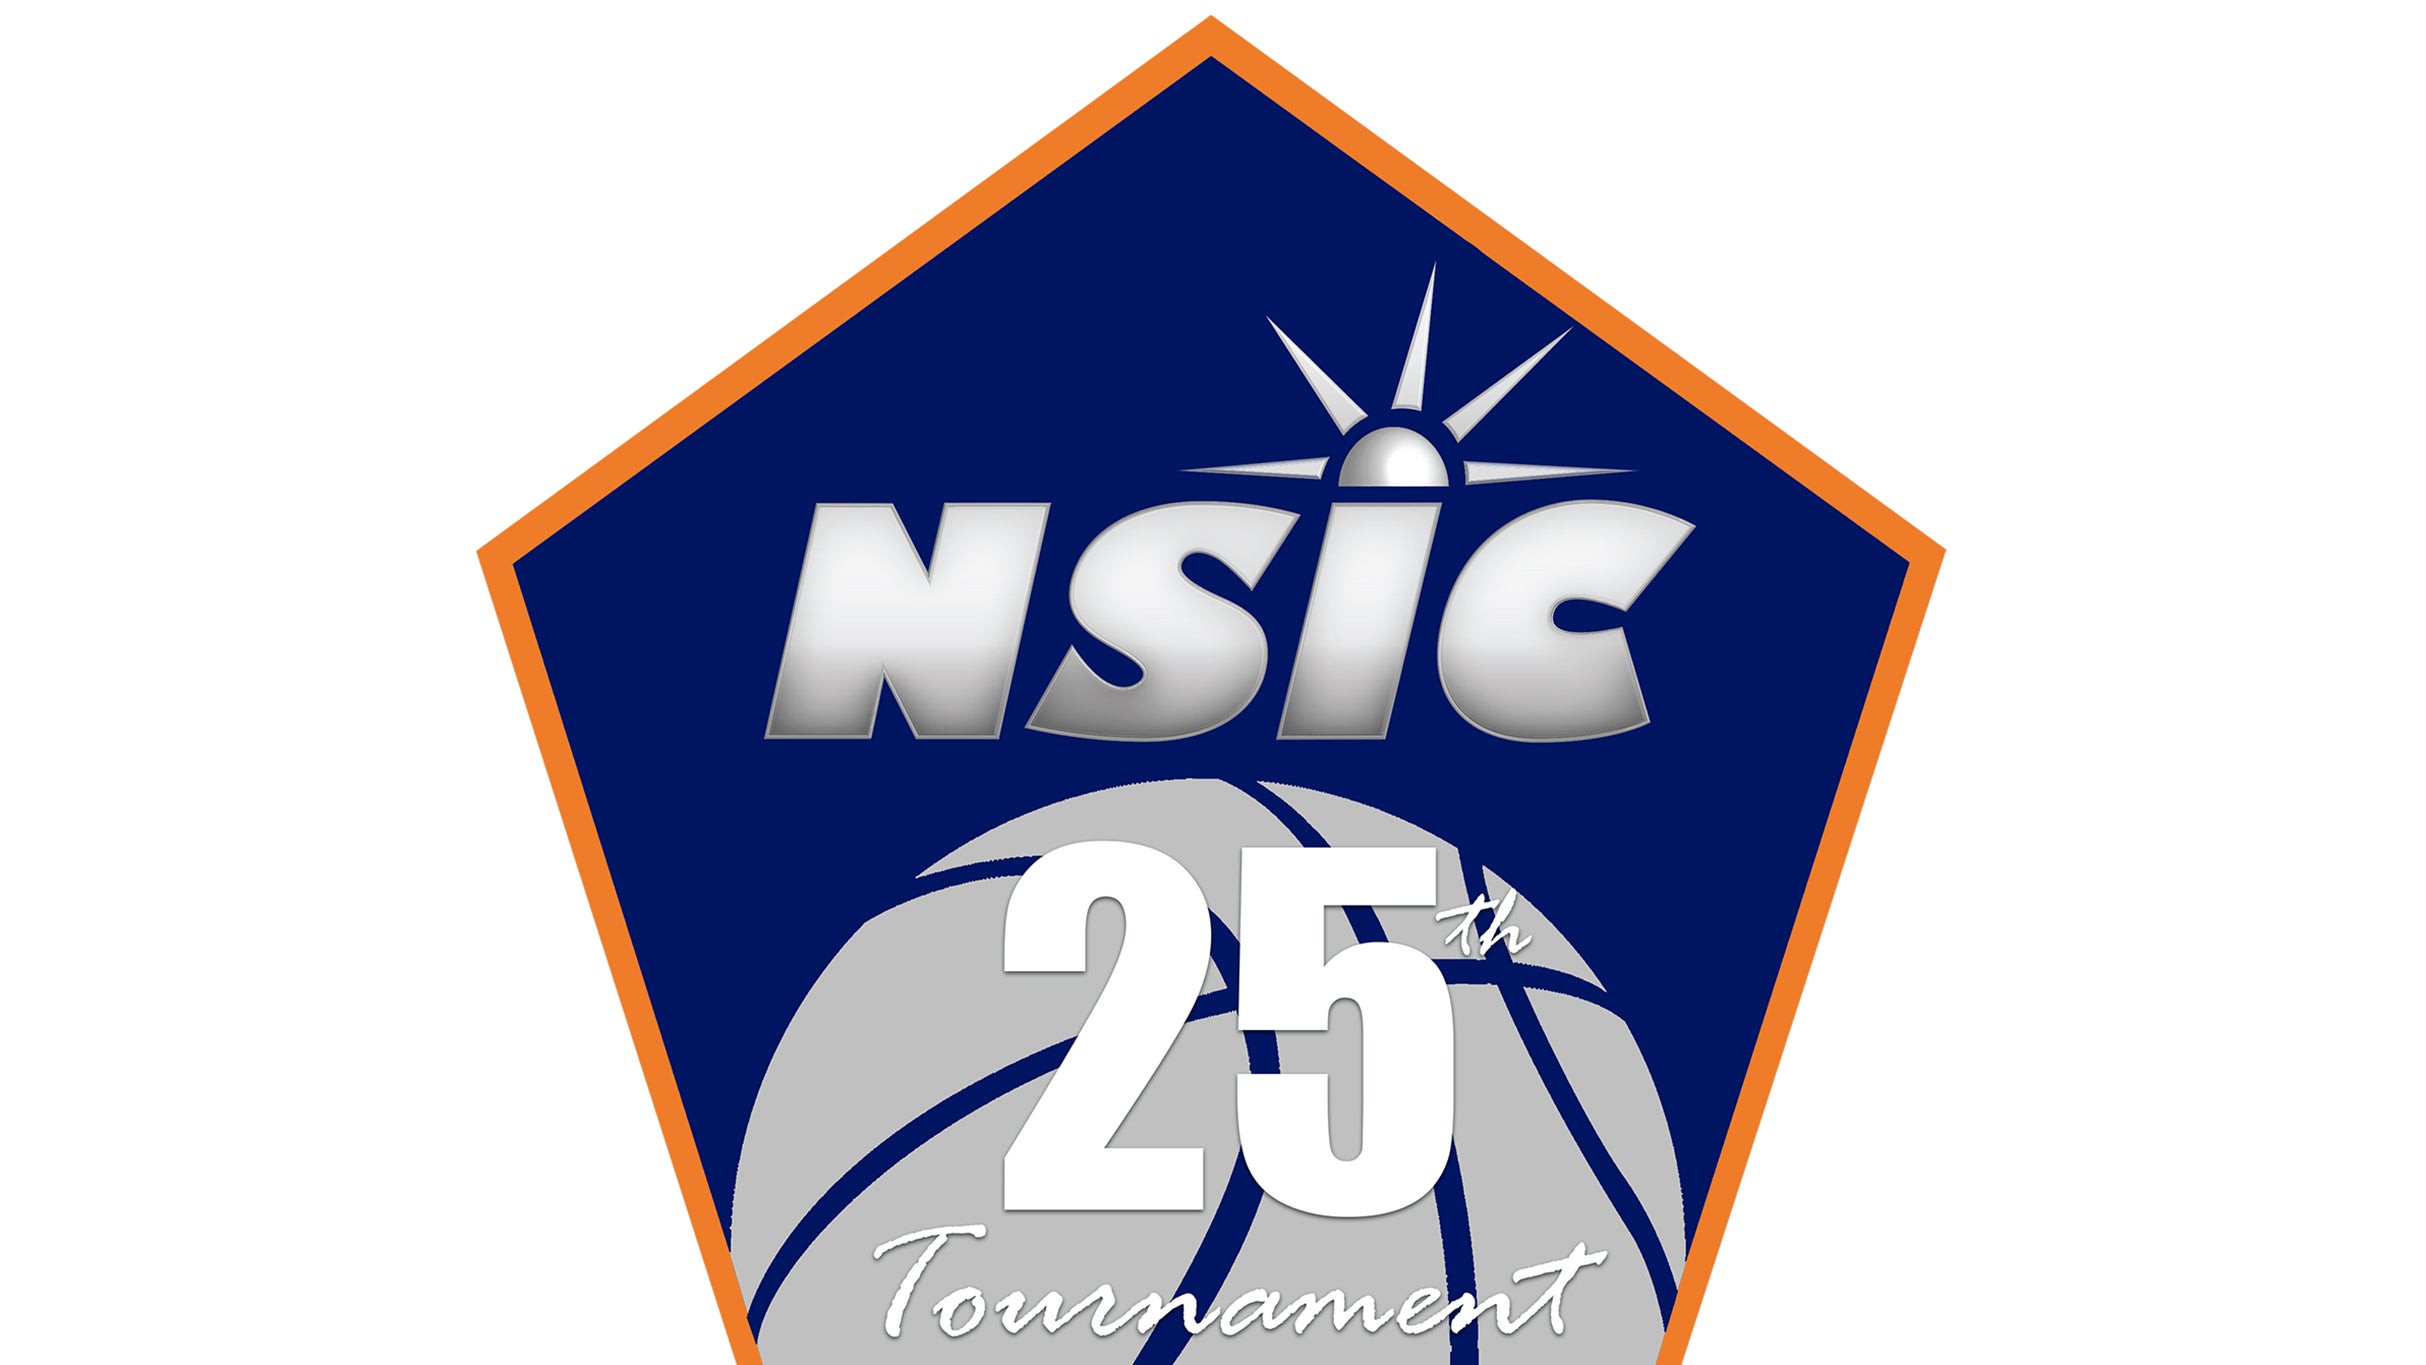 NSIC Tournament - Session 6-Womens at Sanford Pentagon - Sioux Falls, SD 57107